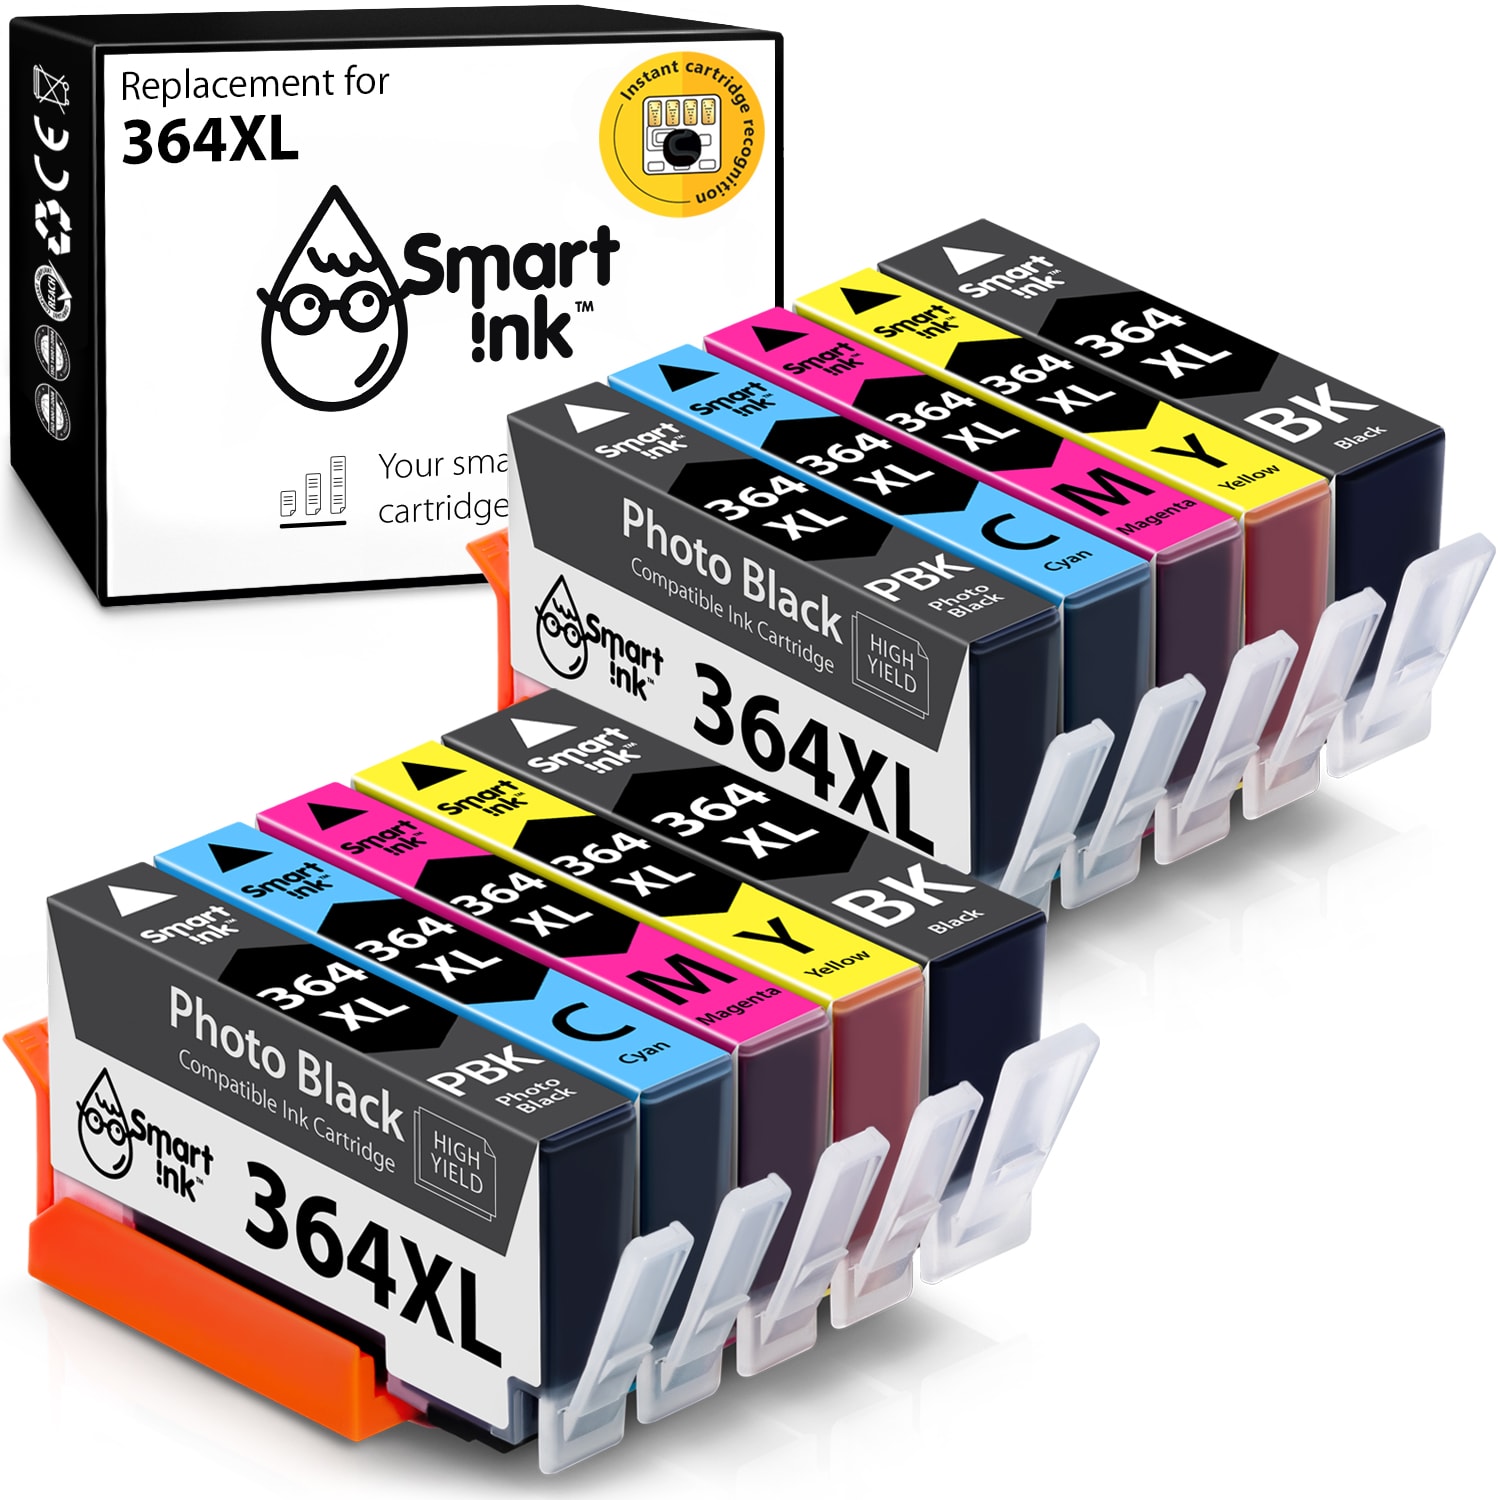 HP 364 XL (Photo Black) Ink Cartridge Replacement - Buy Printer Cartridges in Europe the best price | Smart Ink